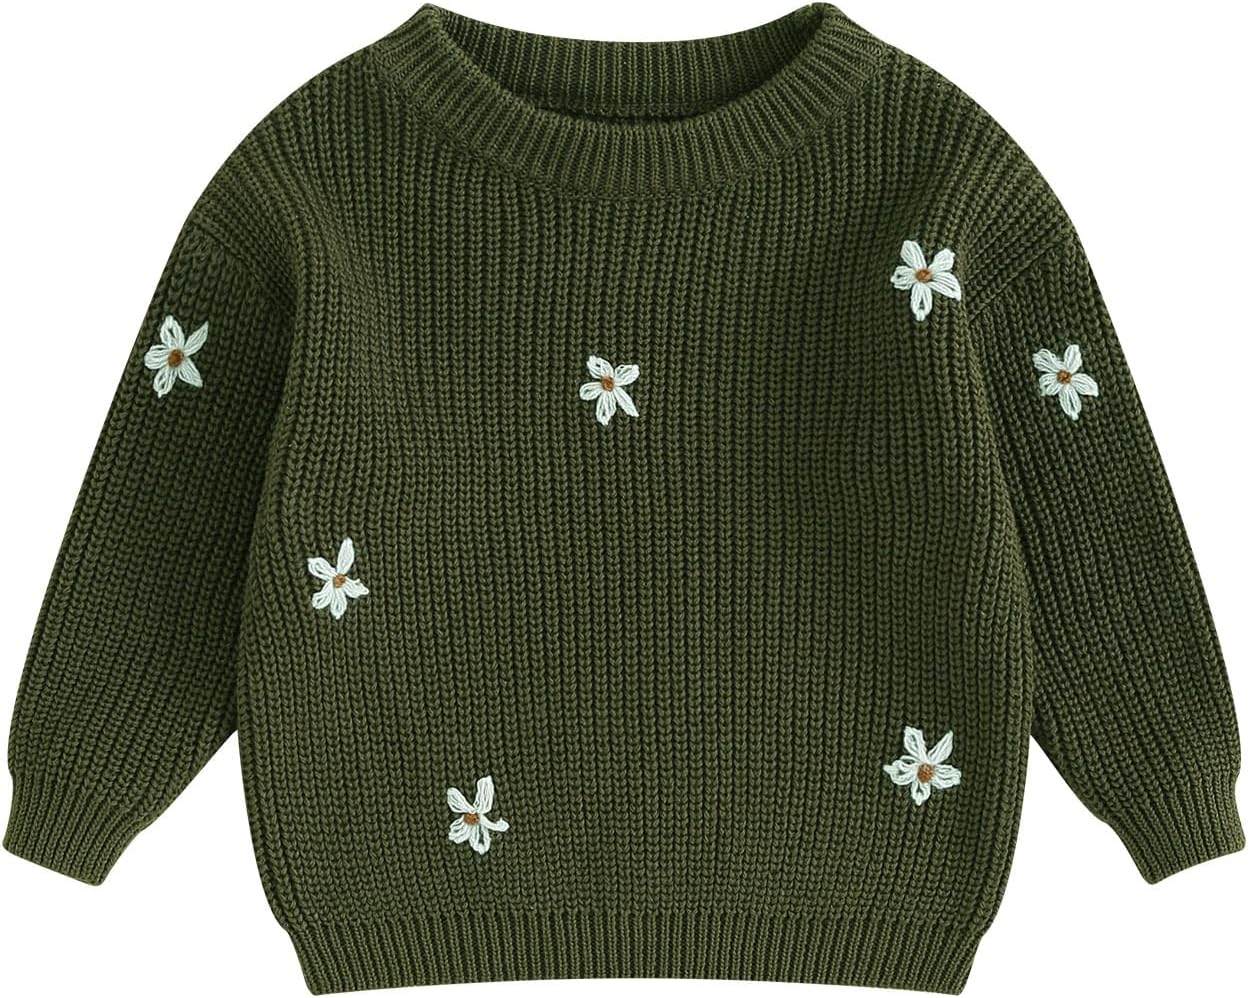 Karwuiio Baby Knit Sweater